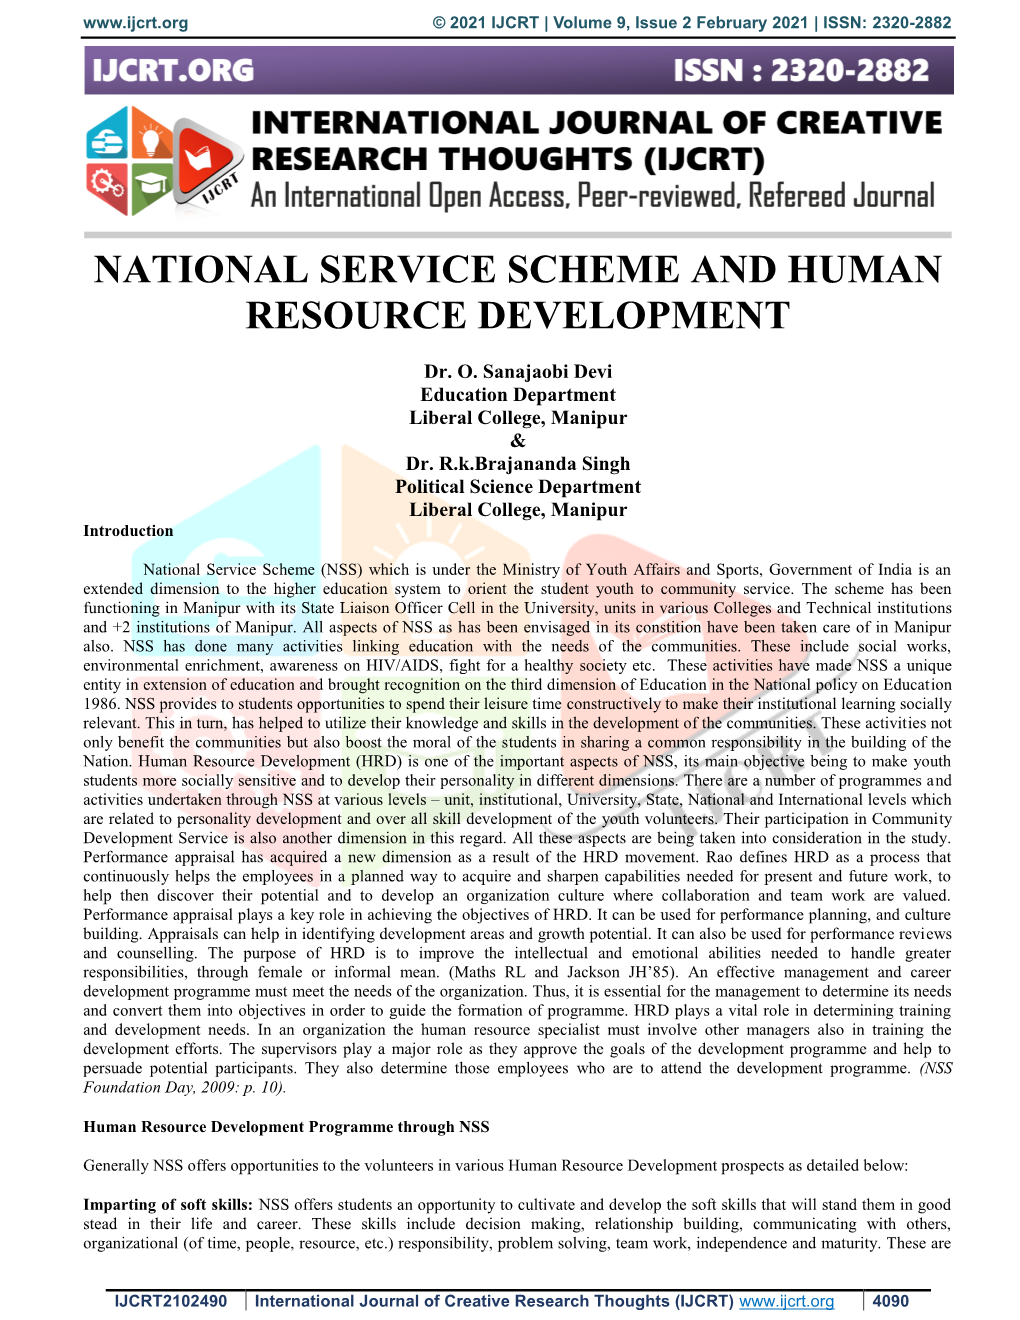 National Service Scheme and Human Resource Development